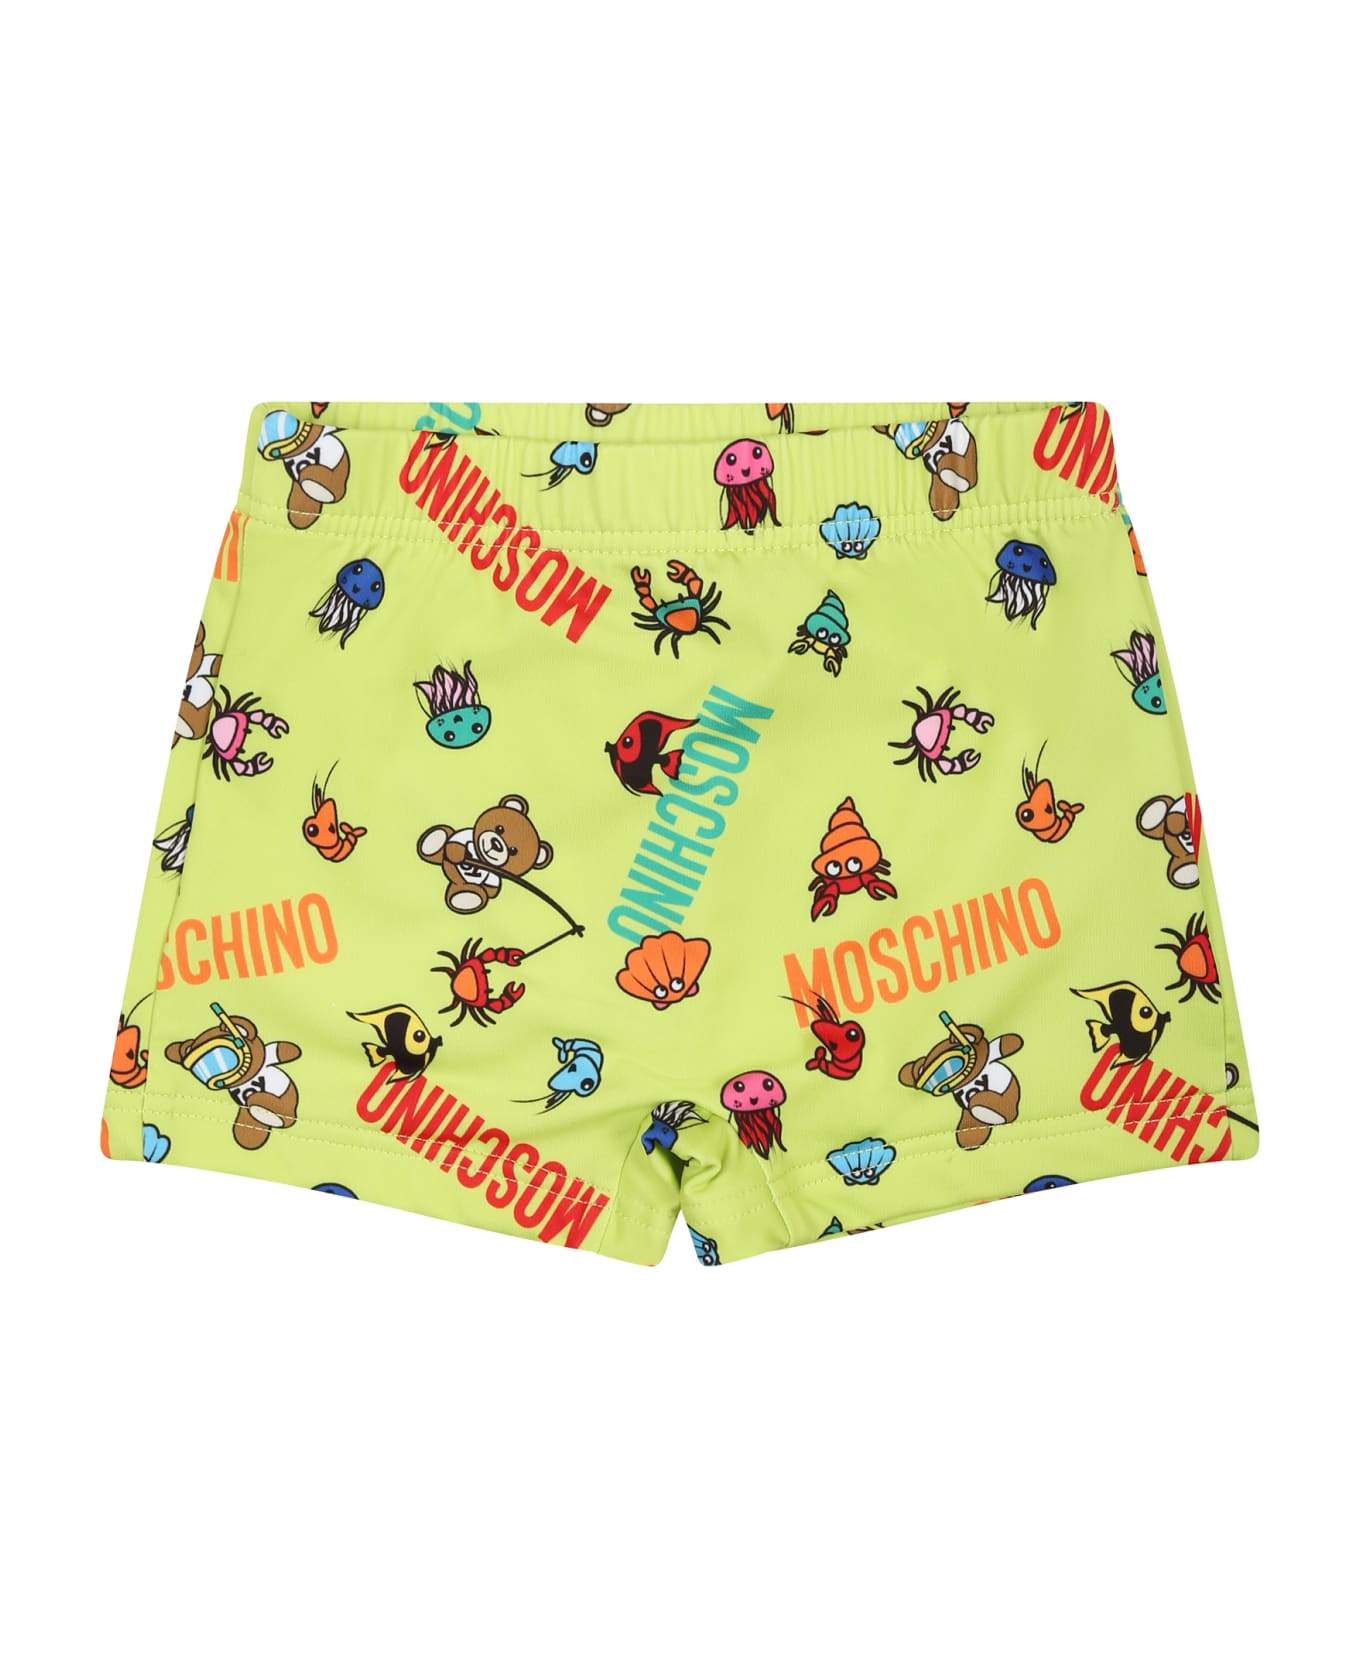 Moschino Green Swim Shorts For Baby Boy With Marine Animals And Logo - Green